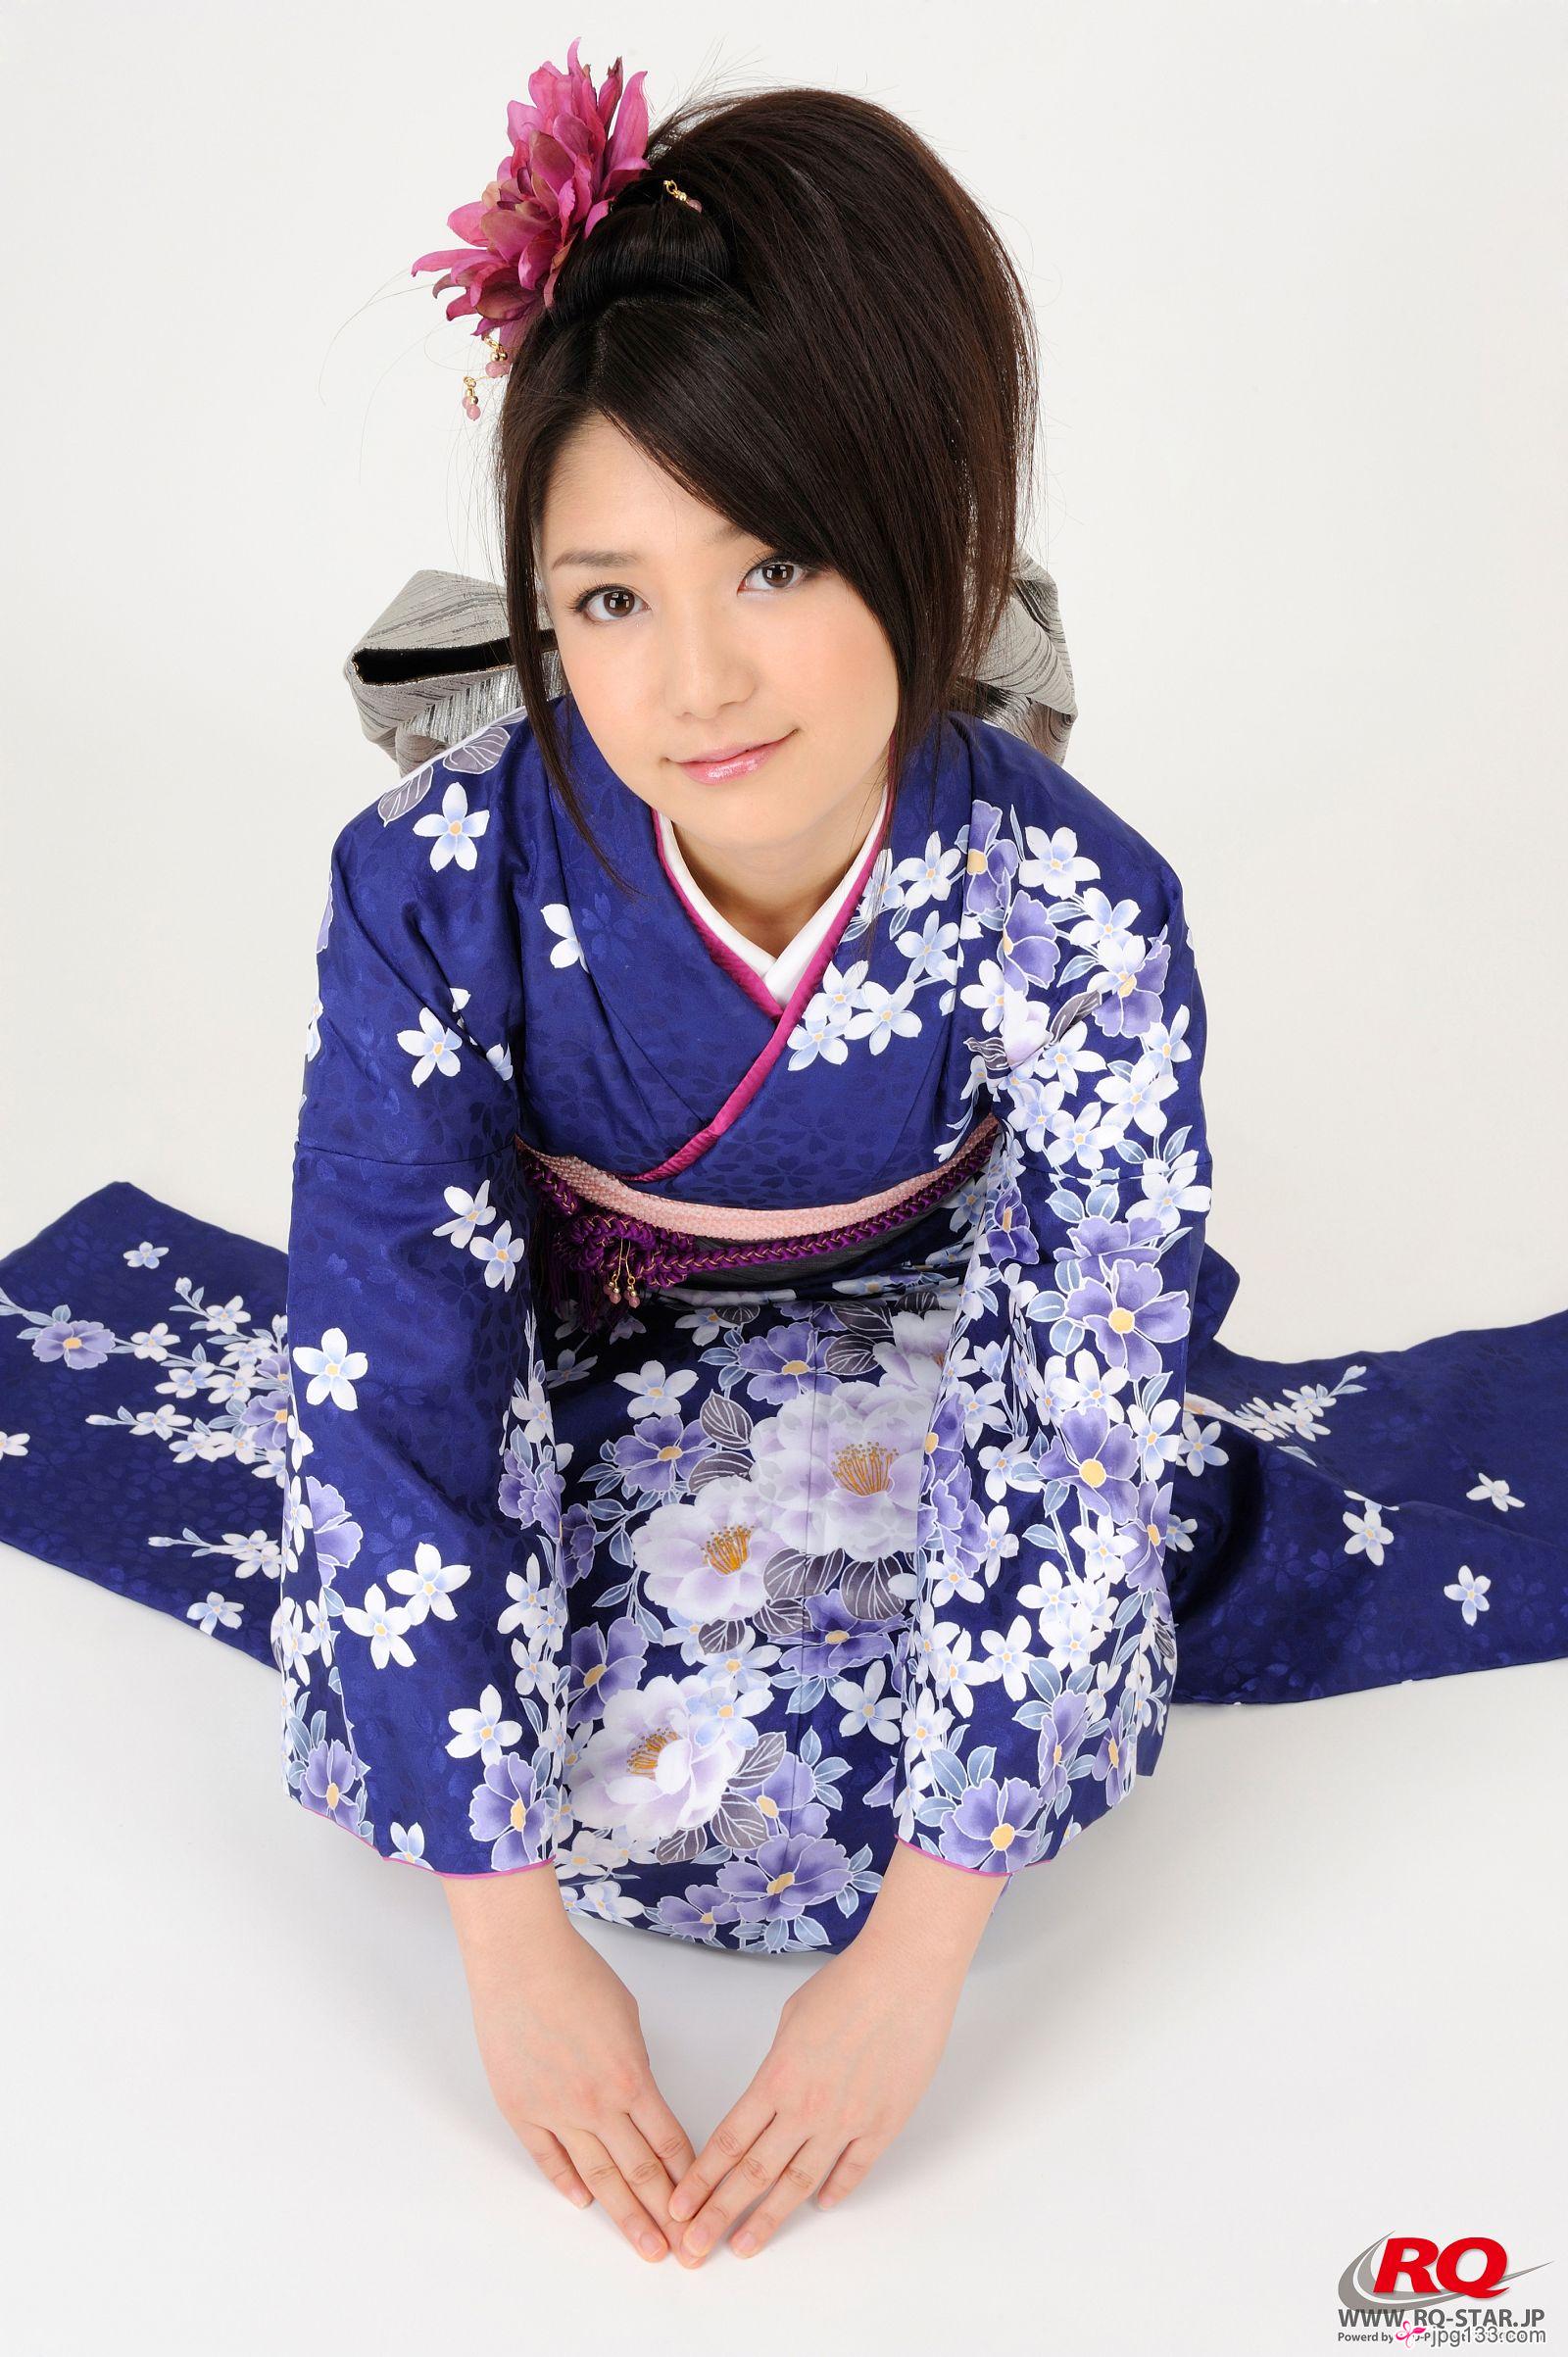 Rq Star女郎 No 0068 Hitomi Furusaki 古崎瞳謹賀新年kimono Happy New Year 7 Rq Star 美女图片 Jpg133